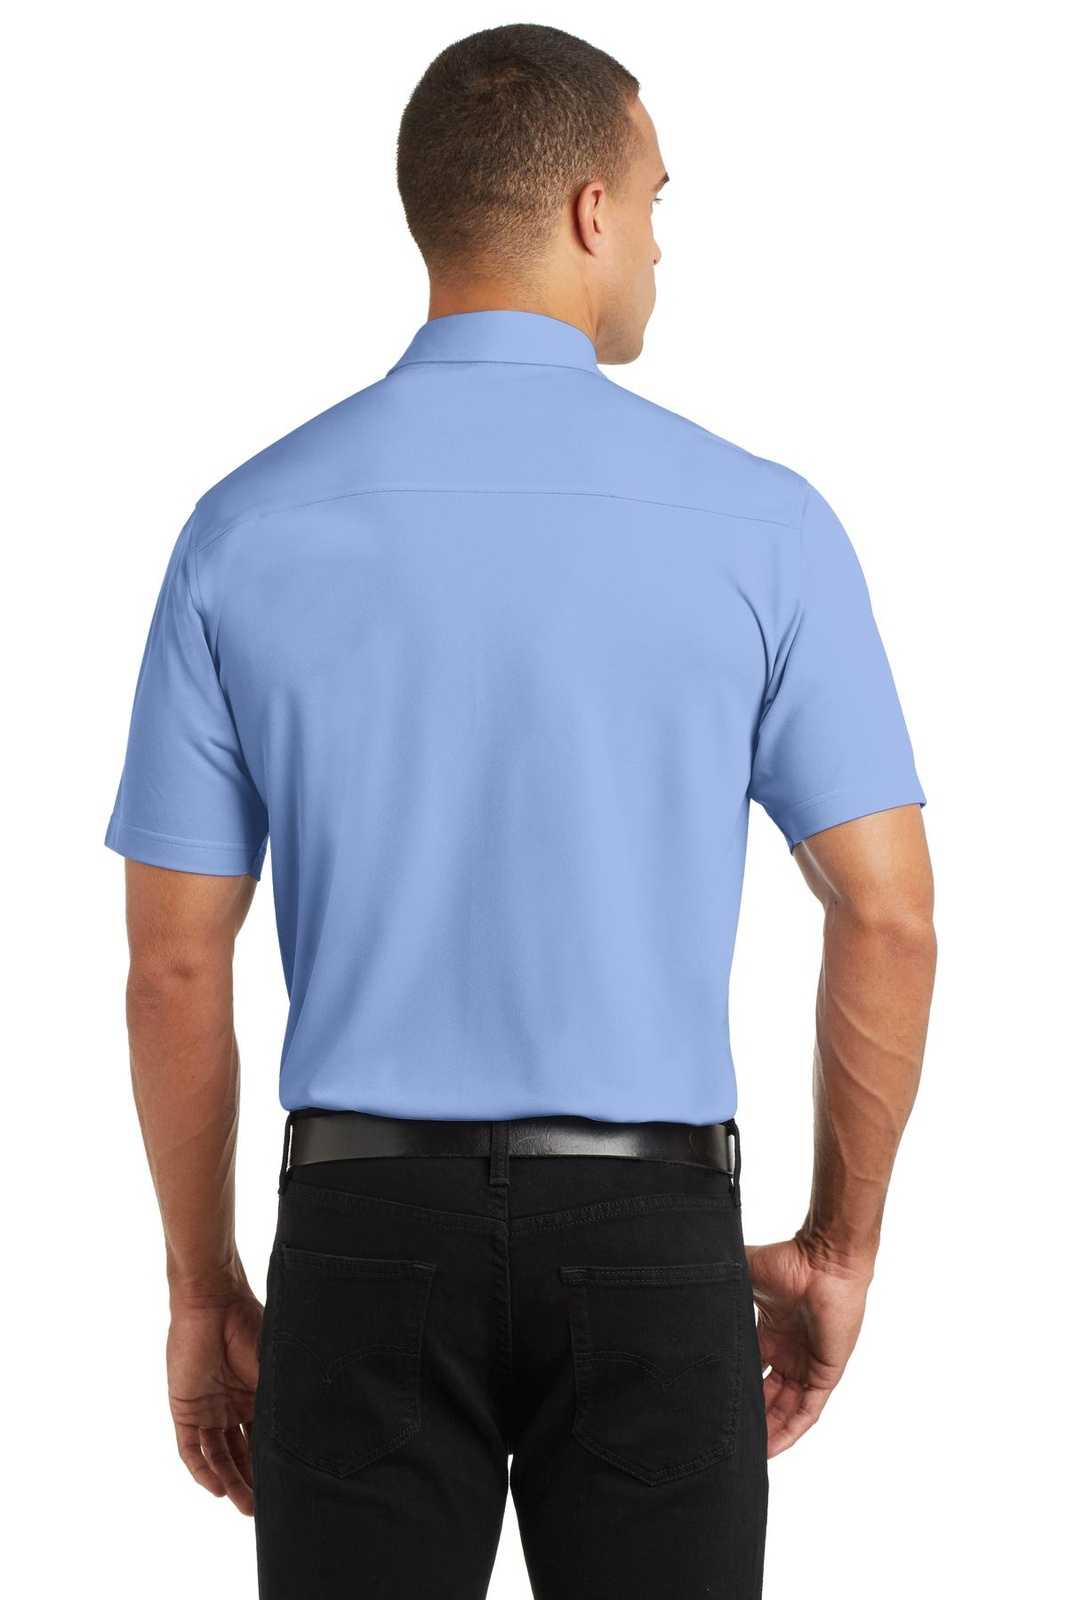 Port Authority K571 Dimension Polo - Dress Shirt Blue - HIT a Double - 2